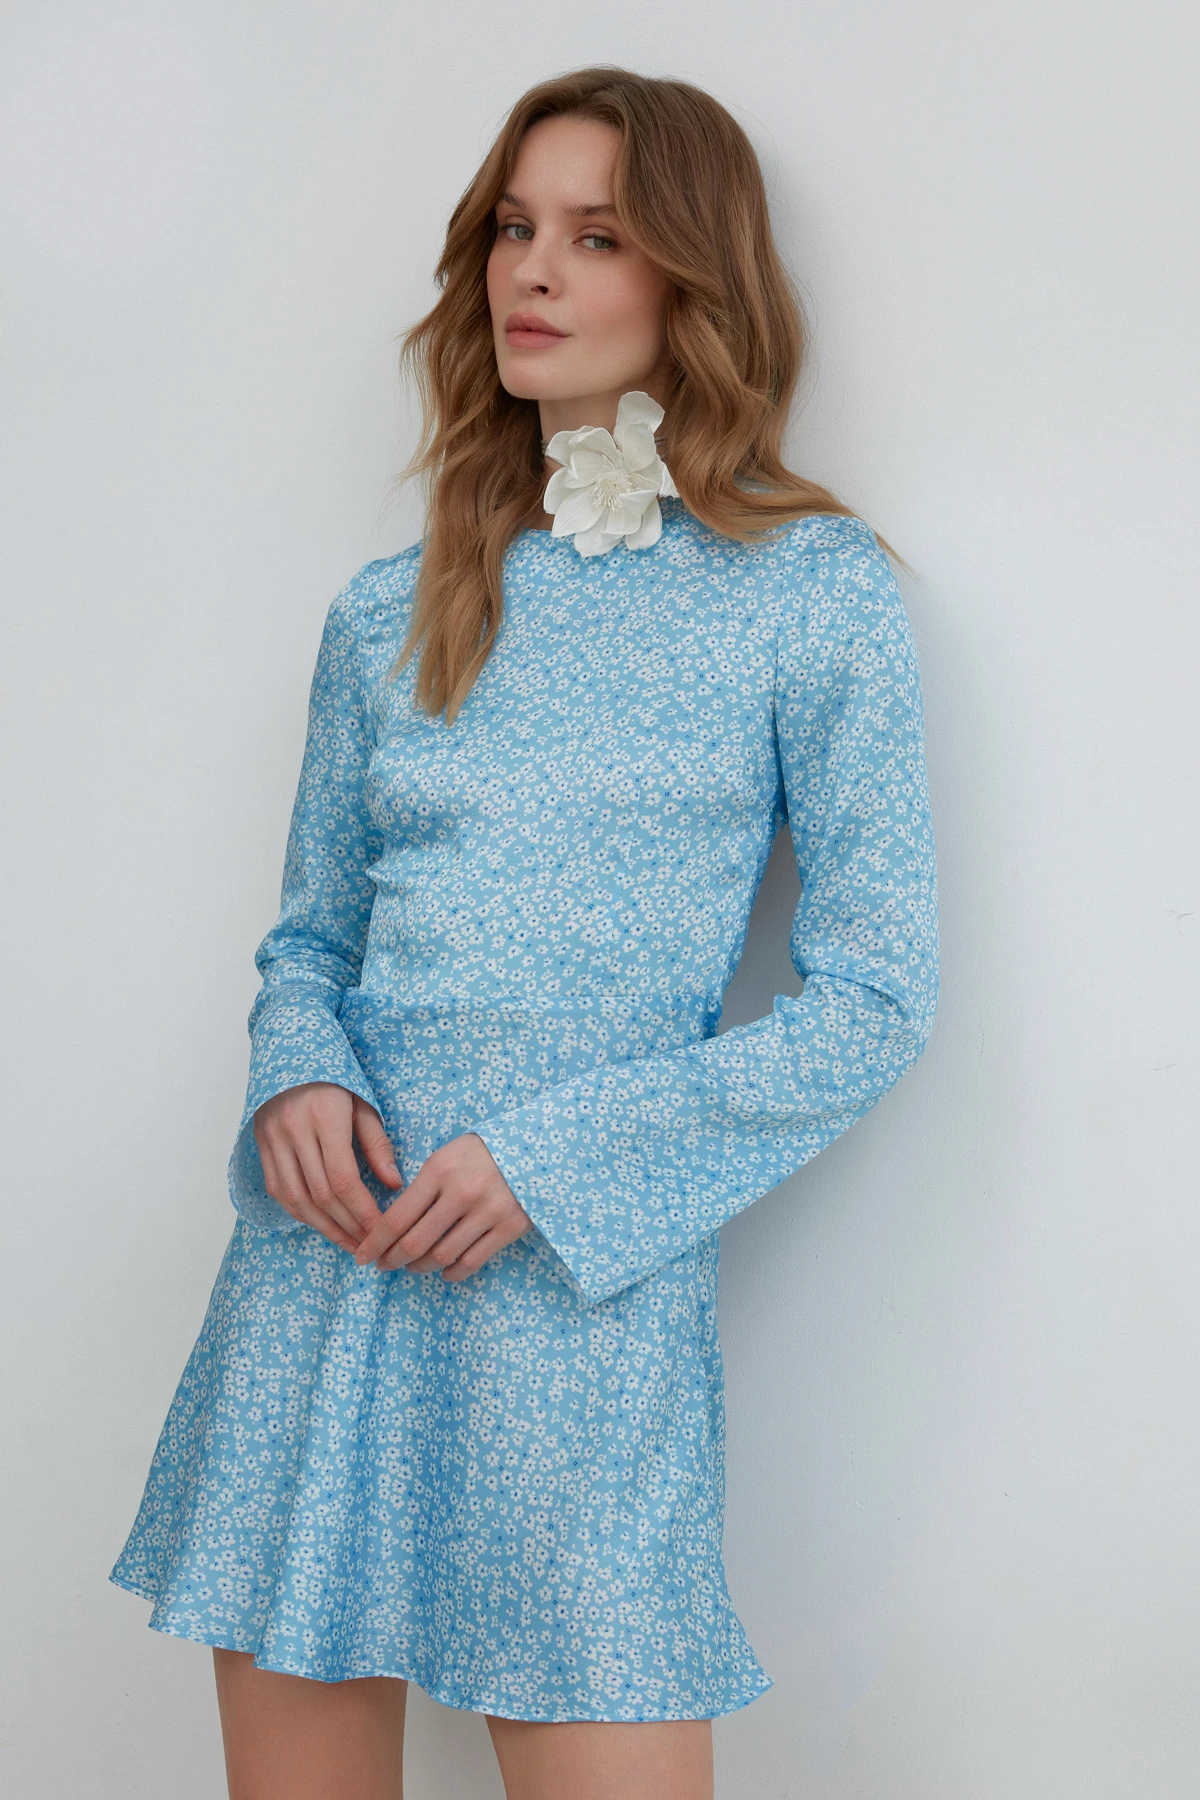 Short blue satin dress in "milky flowers" print, photo 5